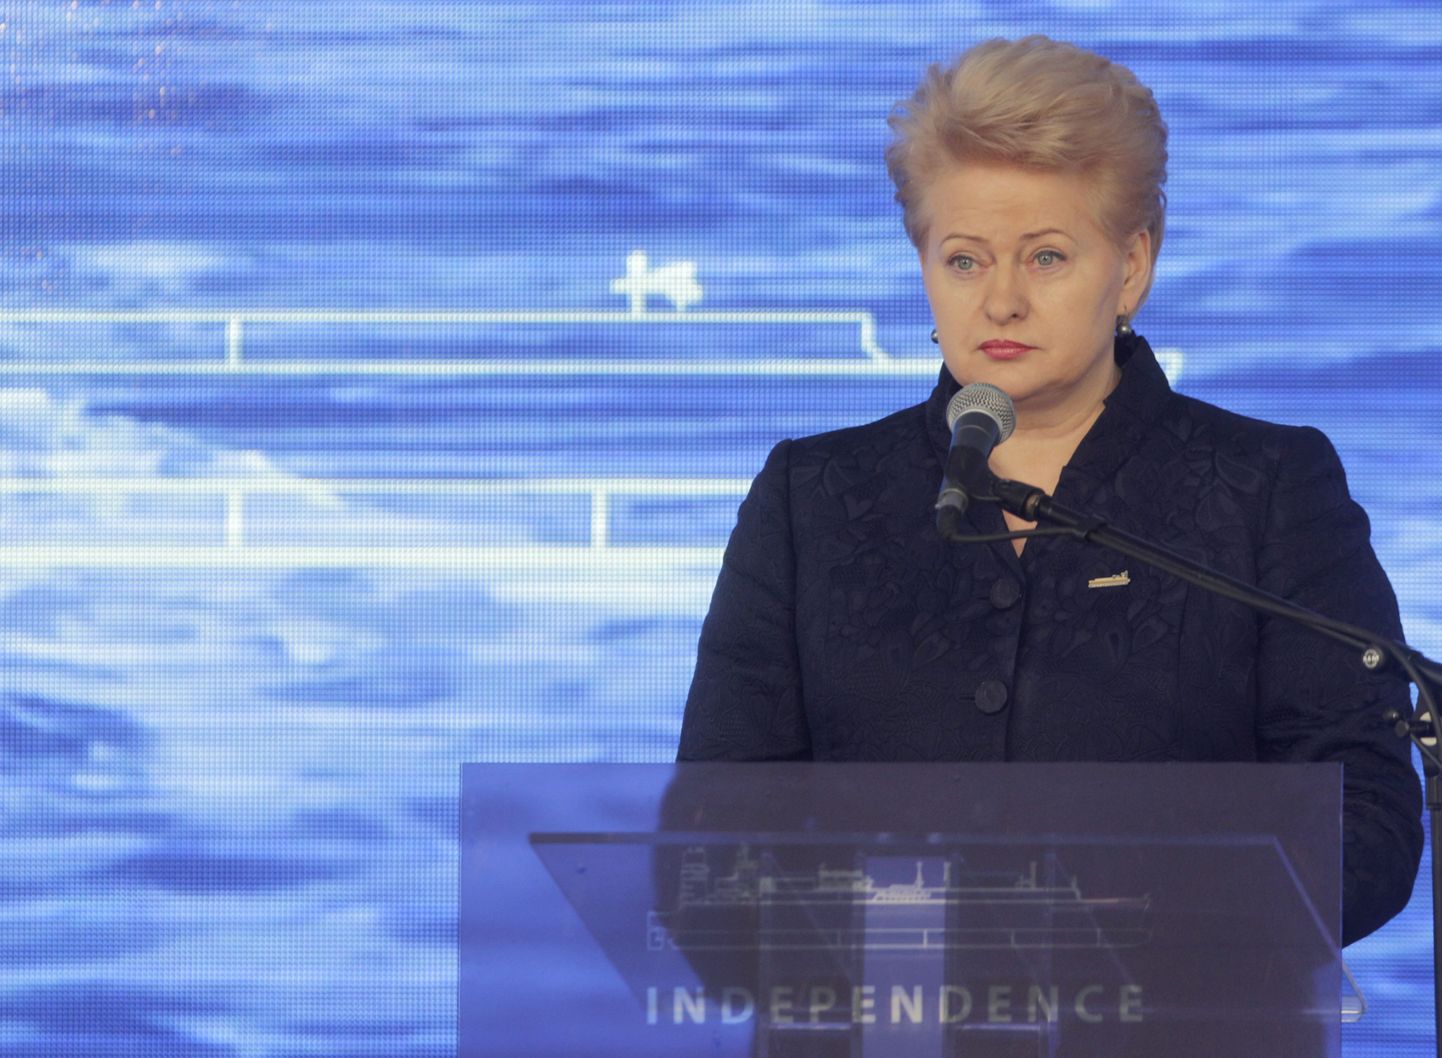 Leedu president Dalia Grybauskaitė